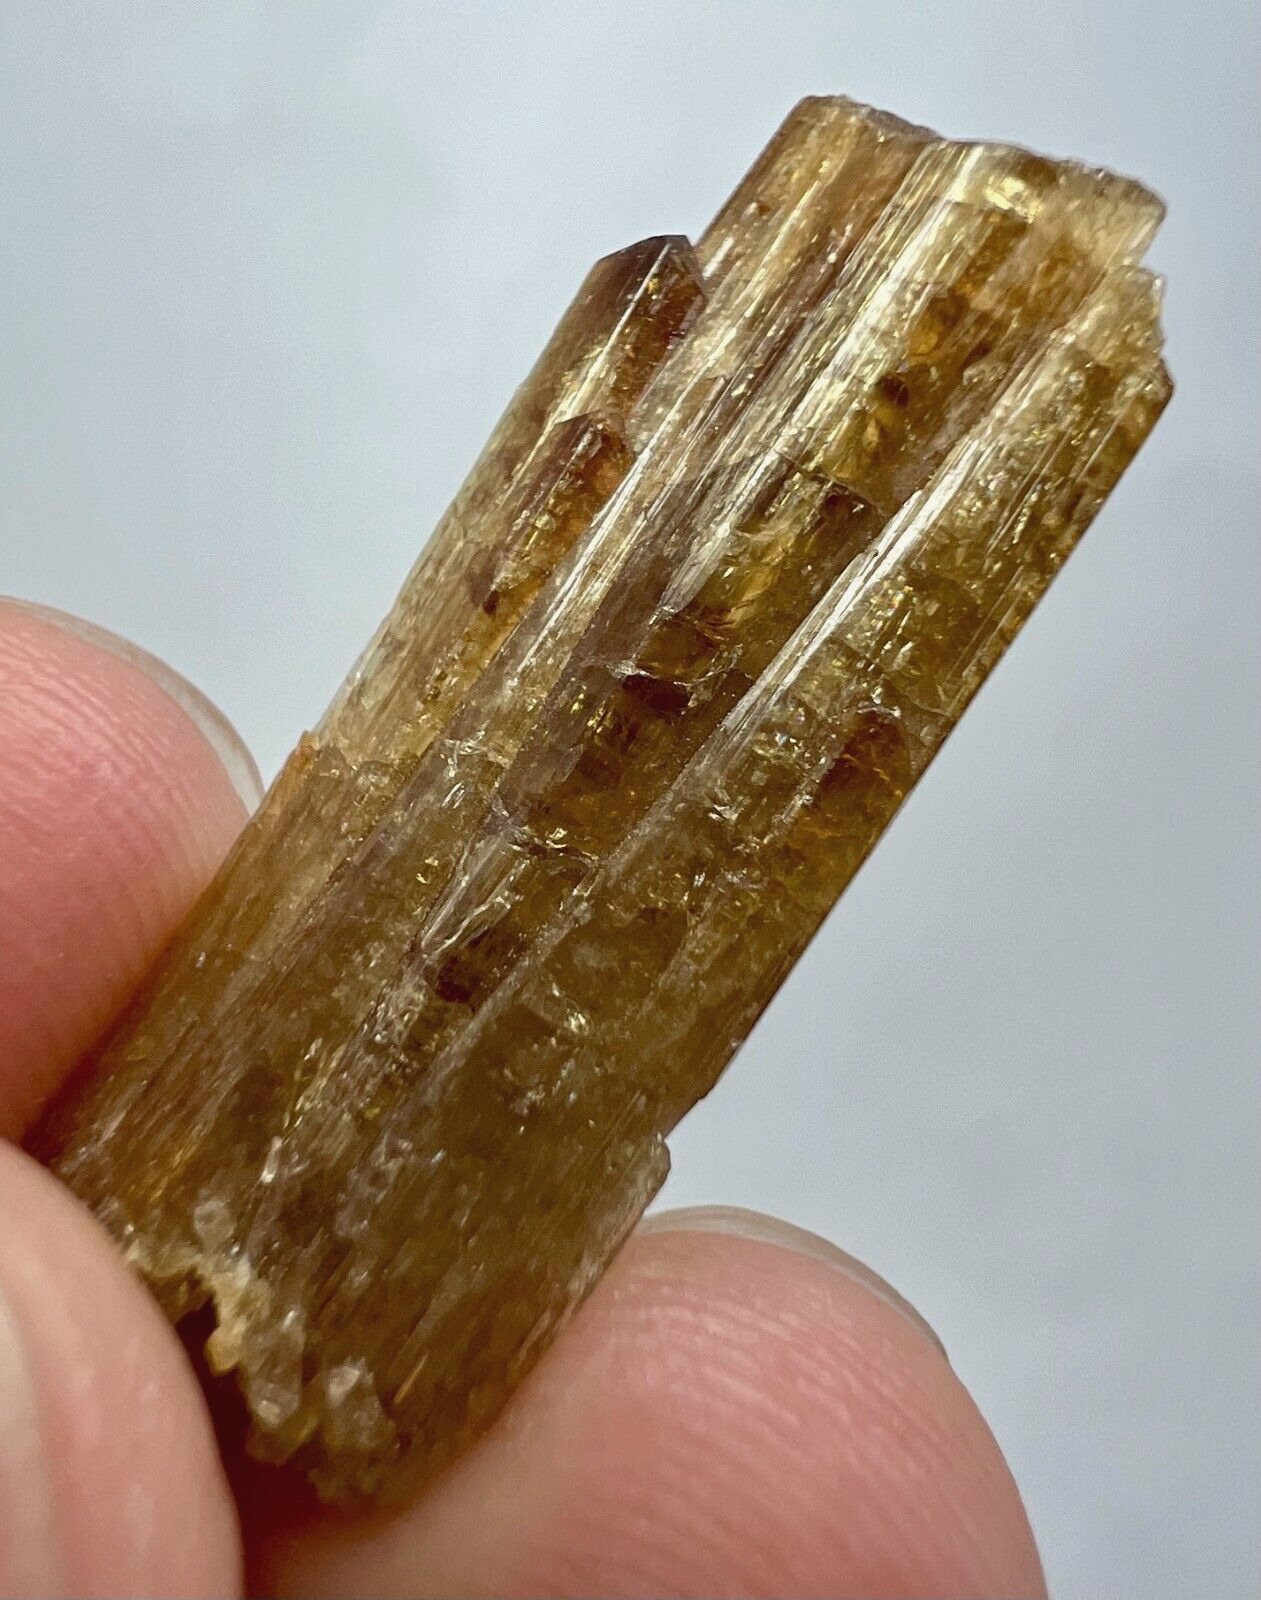 Extremely Rare Terminated Big Childrenite-Eosphorite Crystal @Afg, 12.8 CT